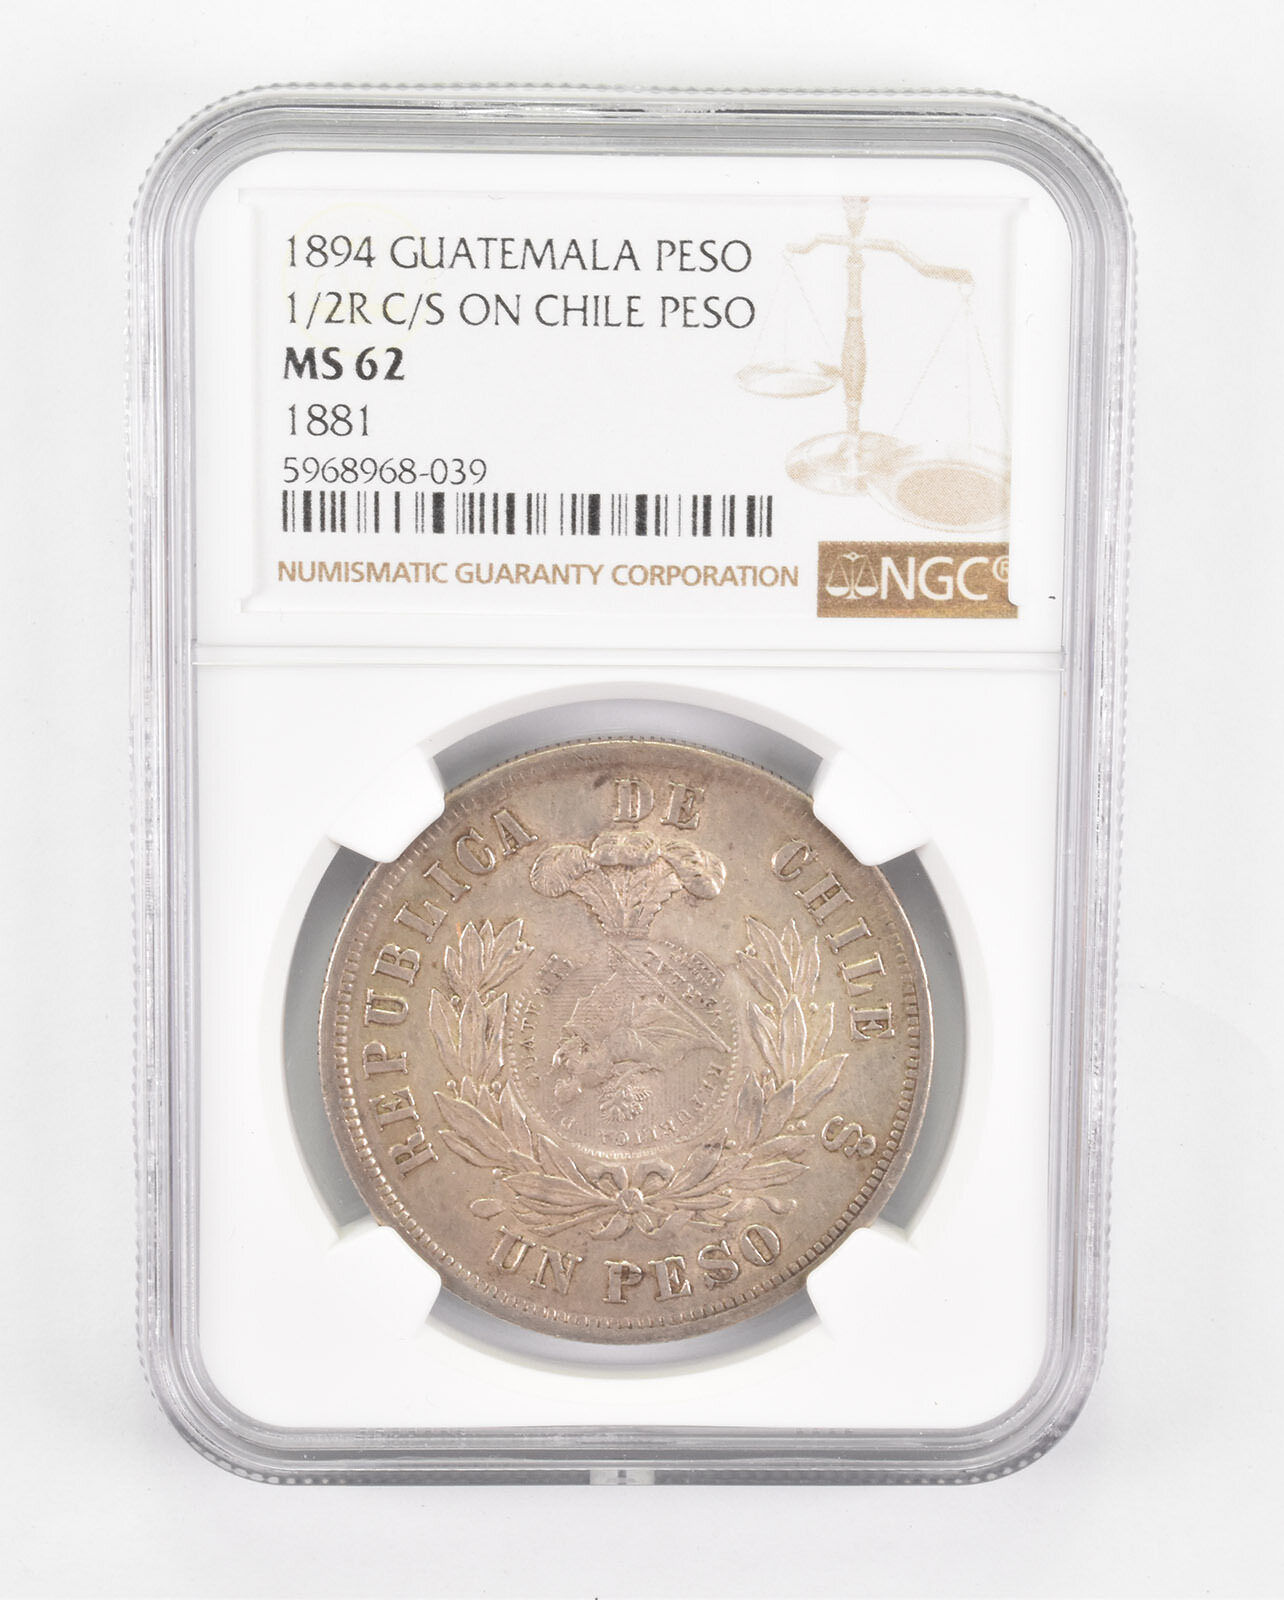 Ms62 1894 Guatemala 1 Peso - 1/2r C/s On Chile Peso - Graded Ngc *0558